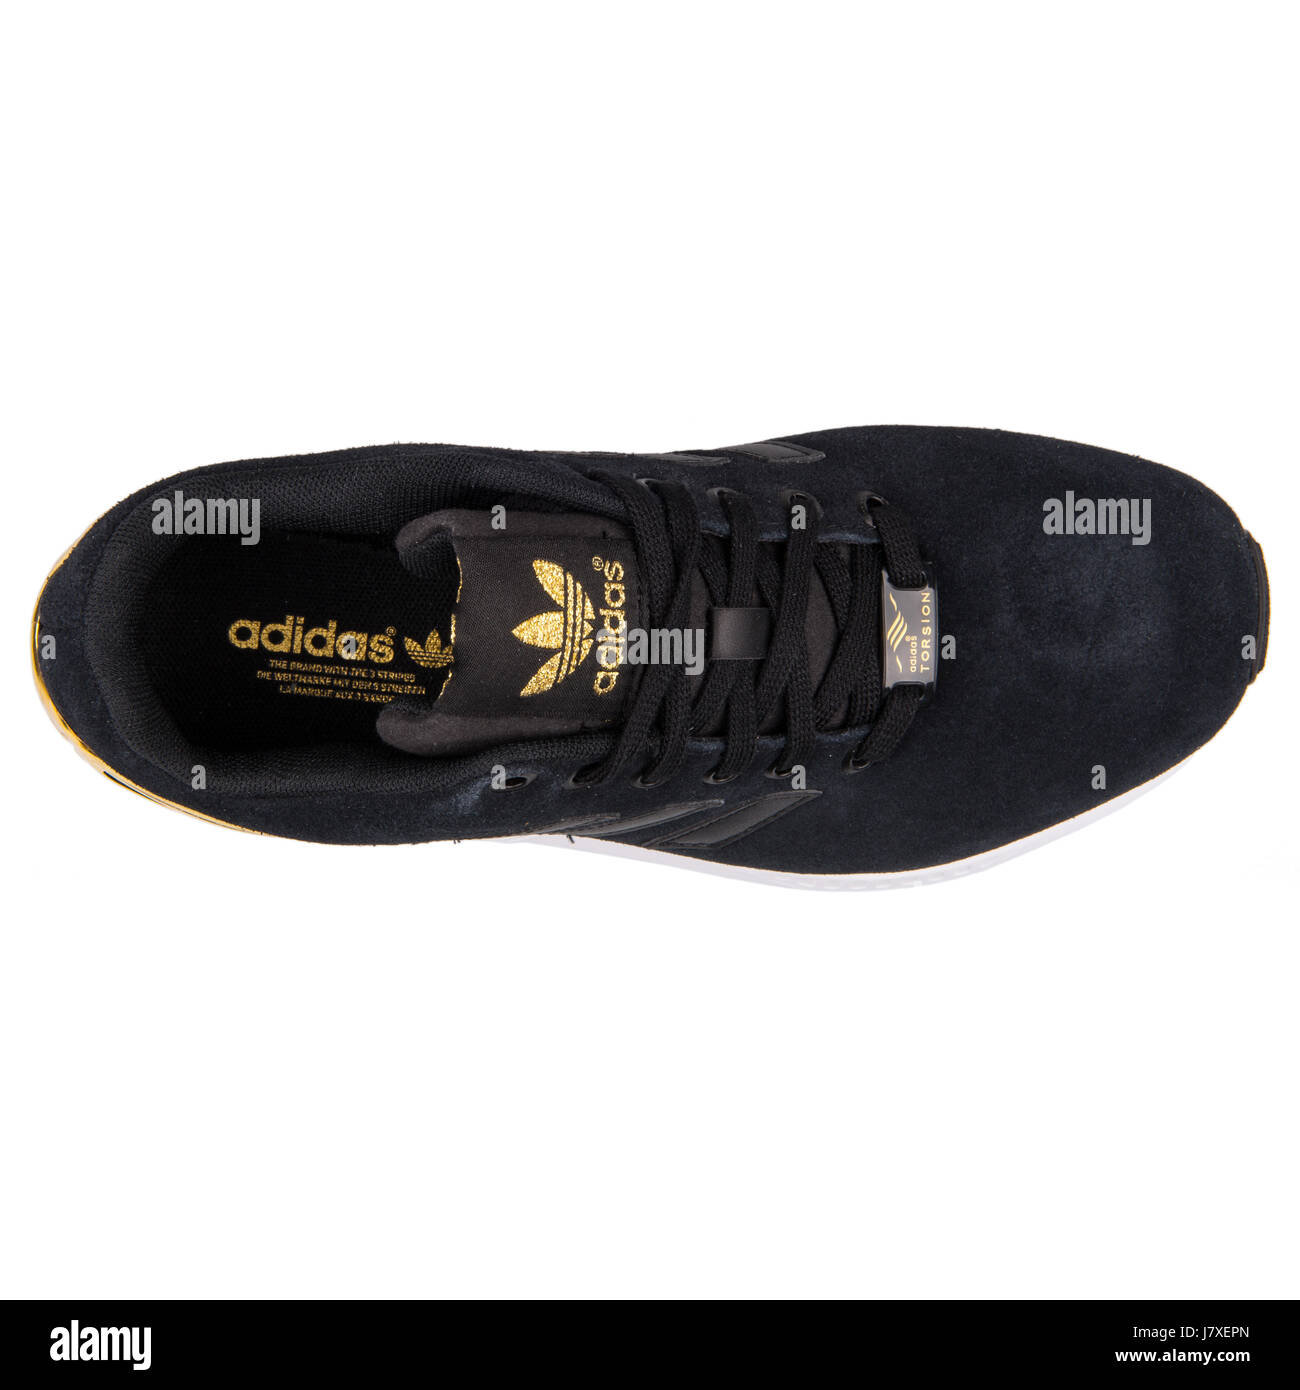 Polvo Relacionado ruido Adidas ZX Flux W Women's Black and Gold Sneakers - B35319 Stock Photo -  Alamy